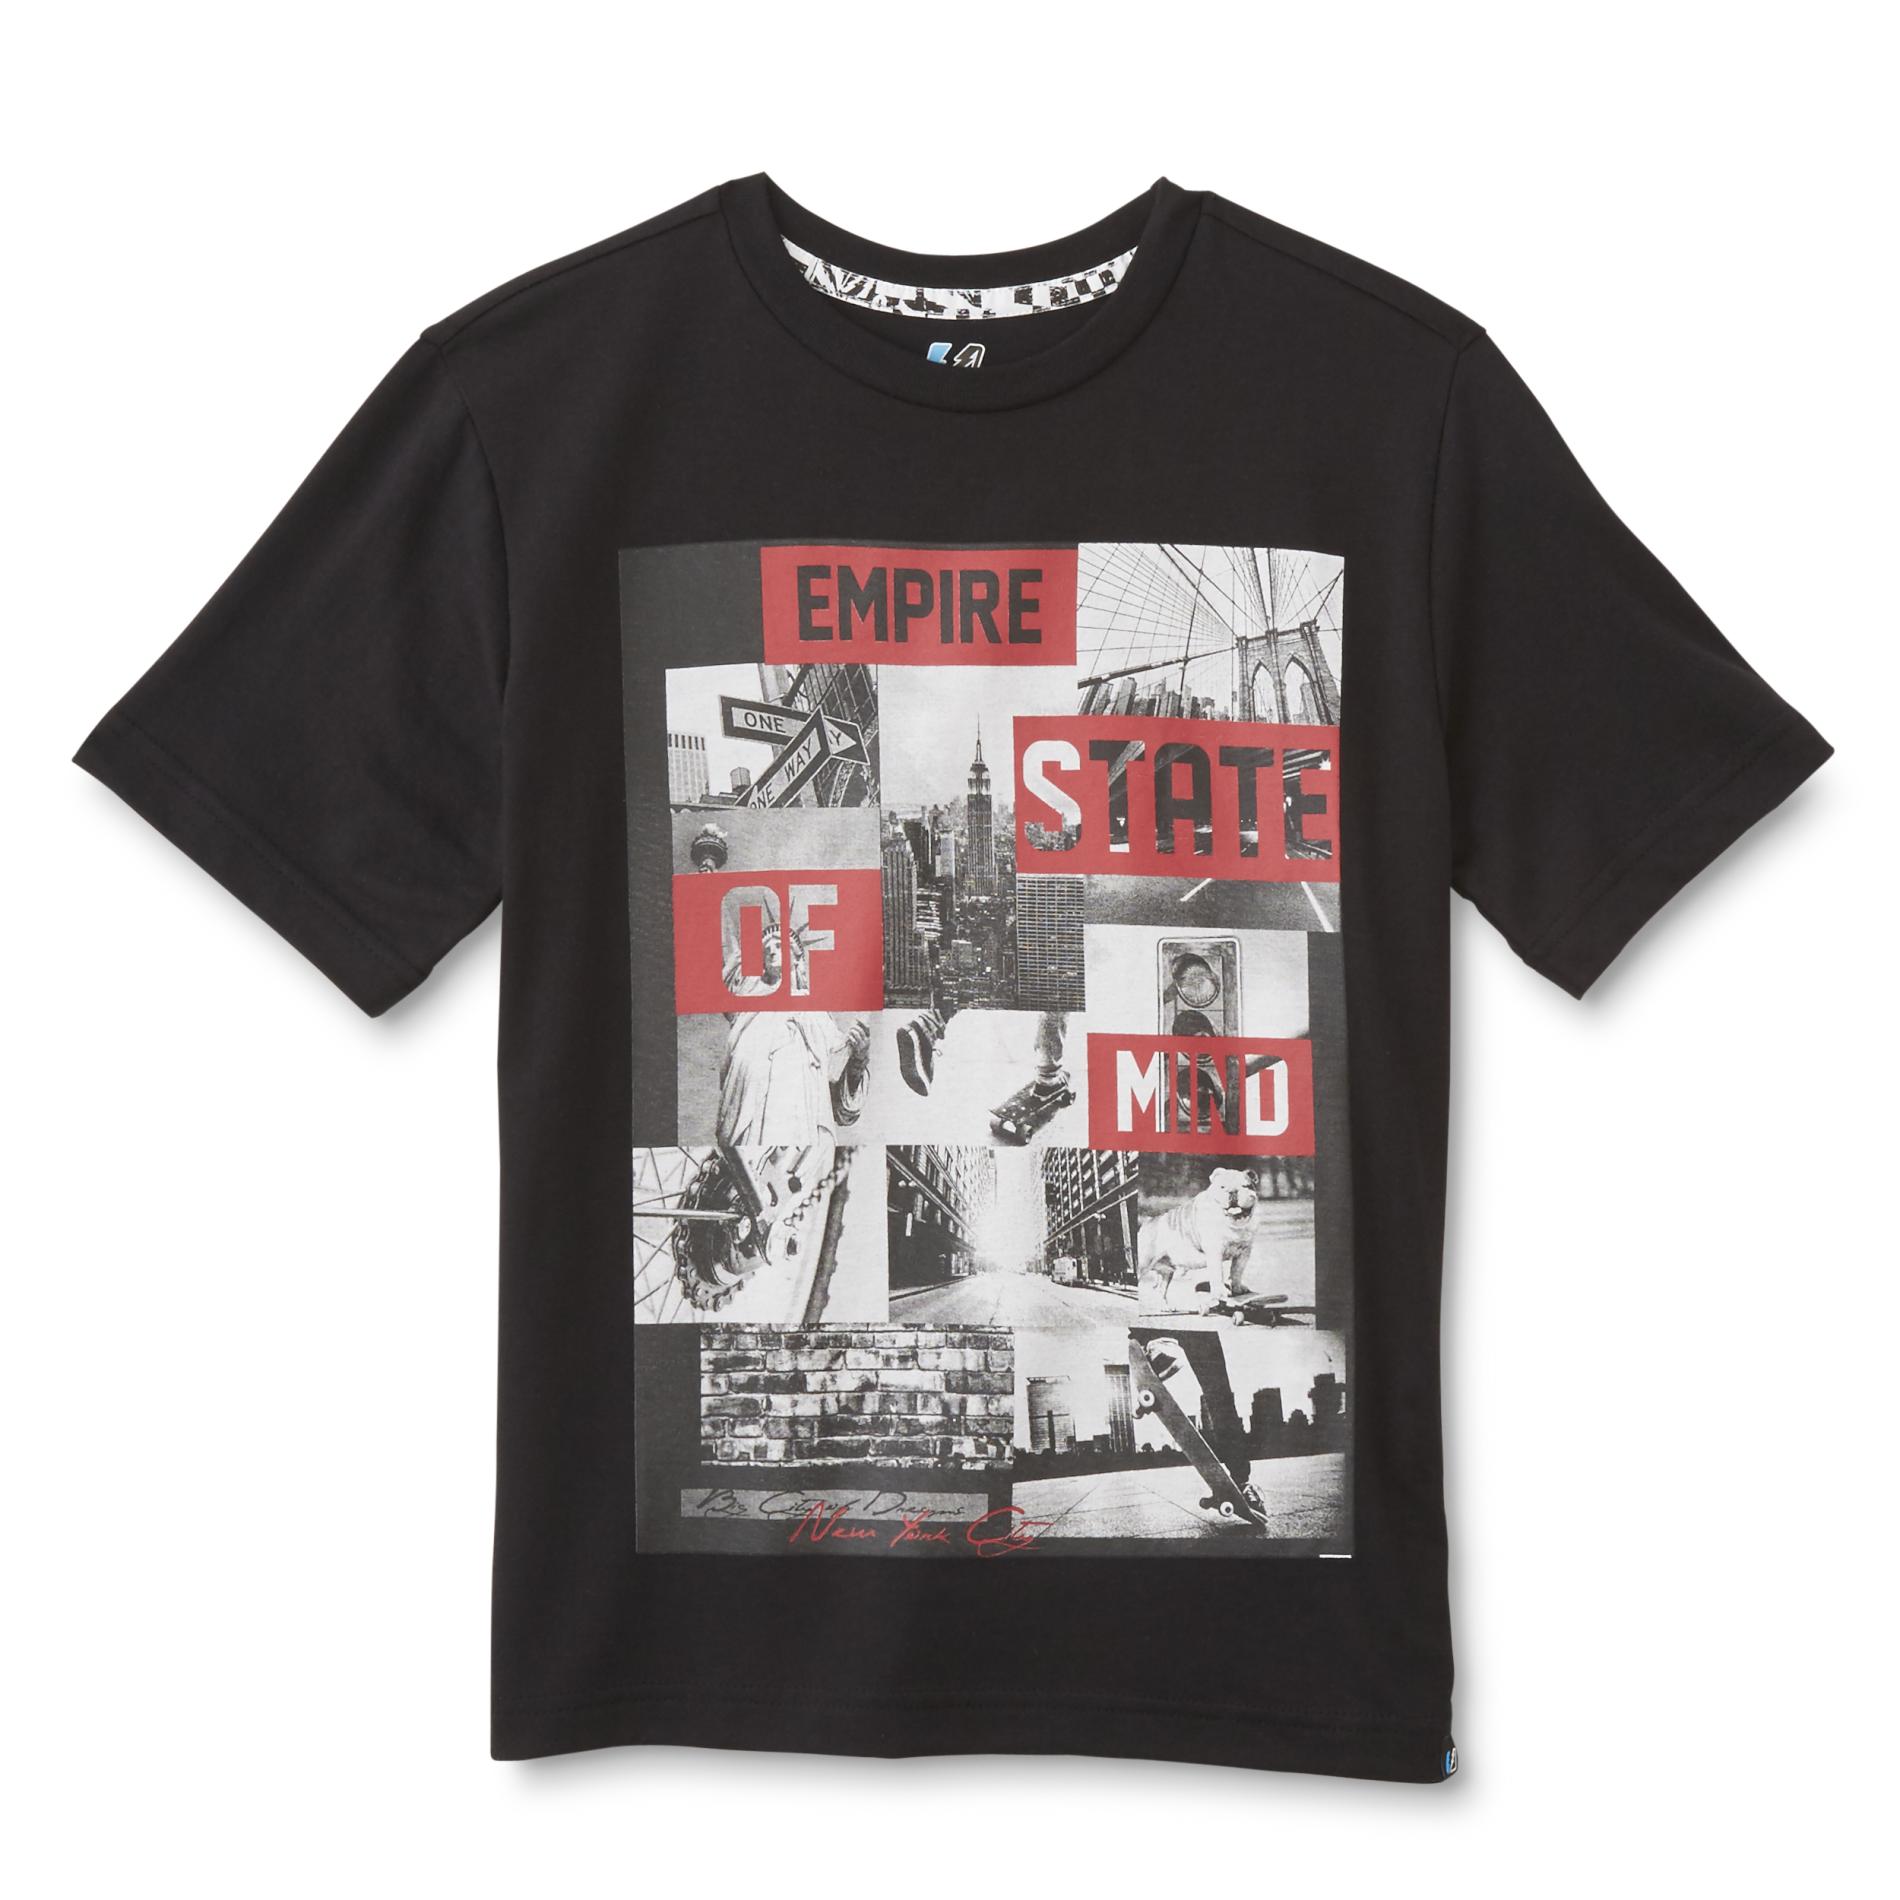 Amplify Boy's Graphic T-Shirt - Go Beyond